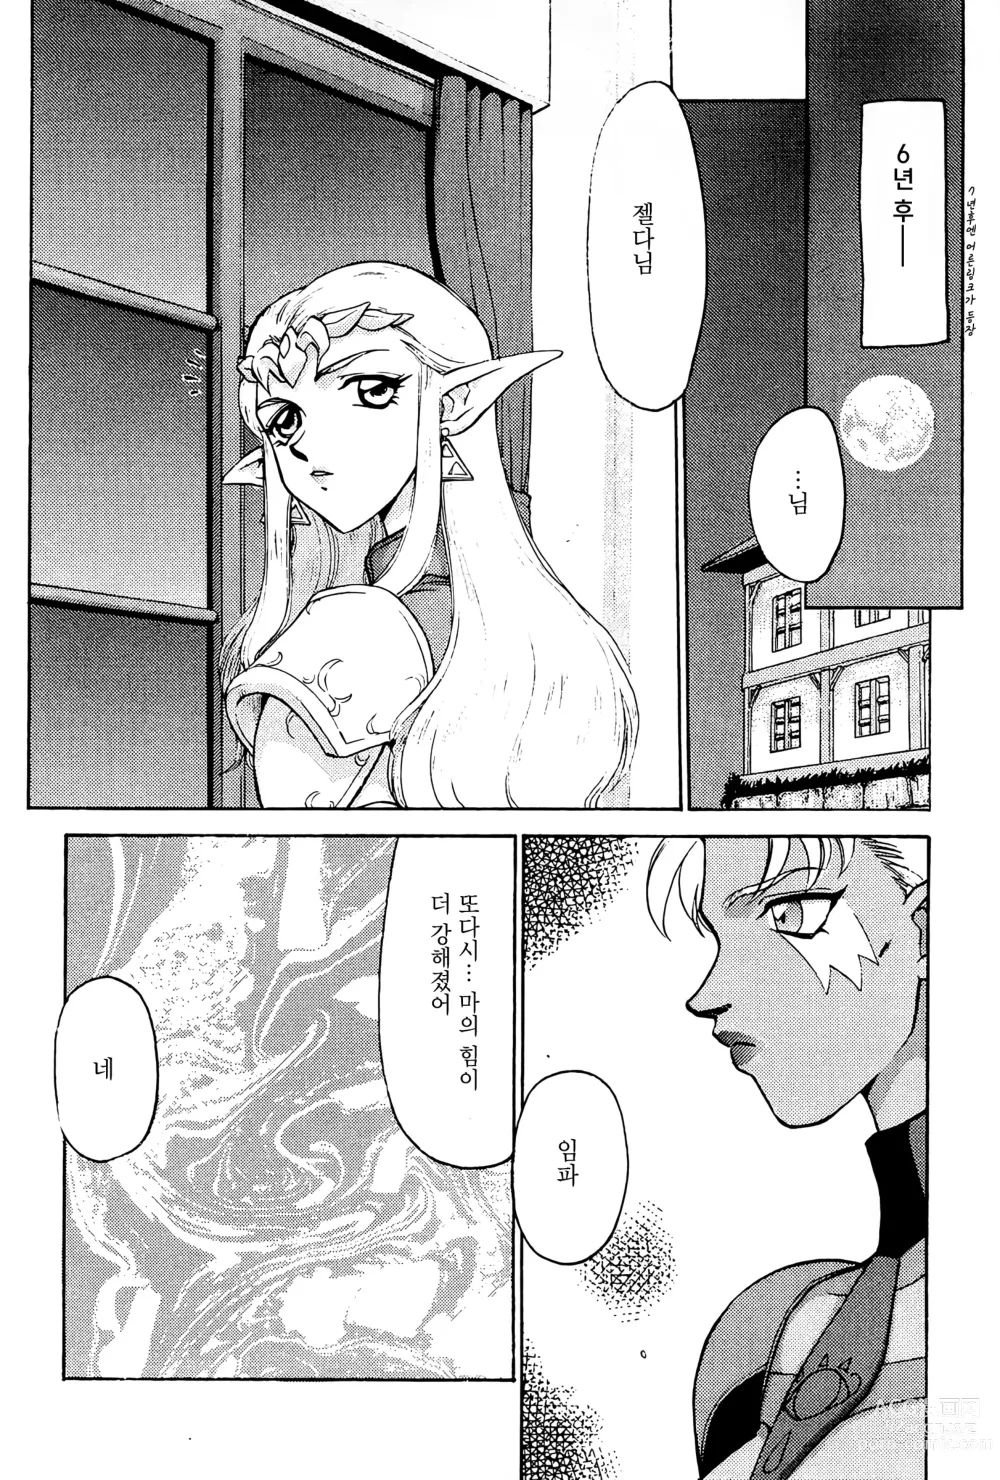 Page 9 of doujinshi NISE Zelda no Densetsu Prologue